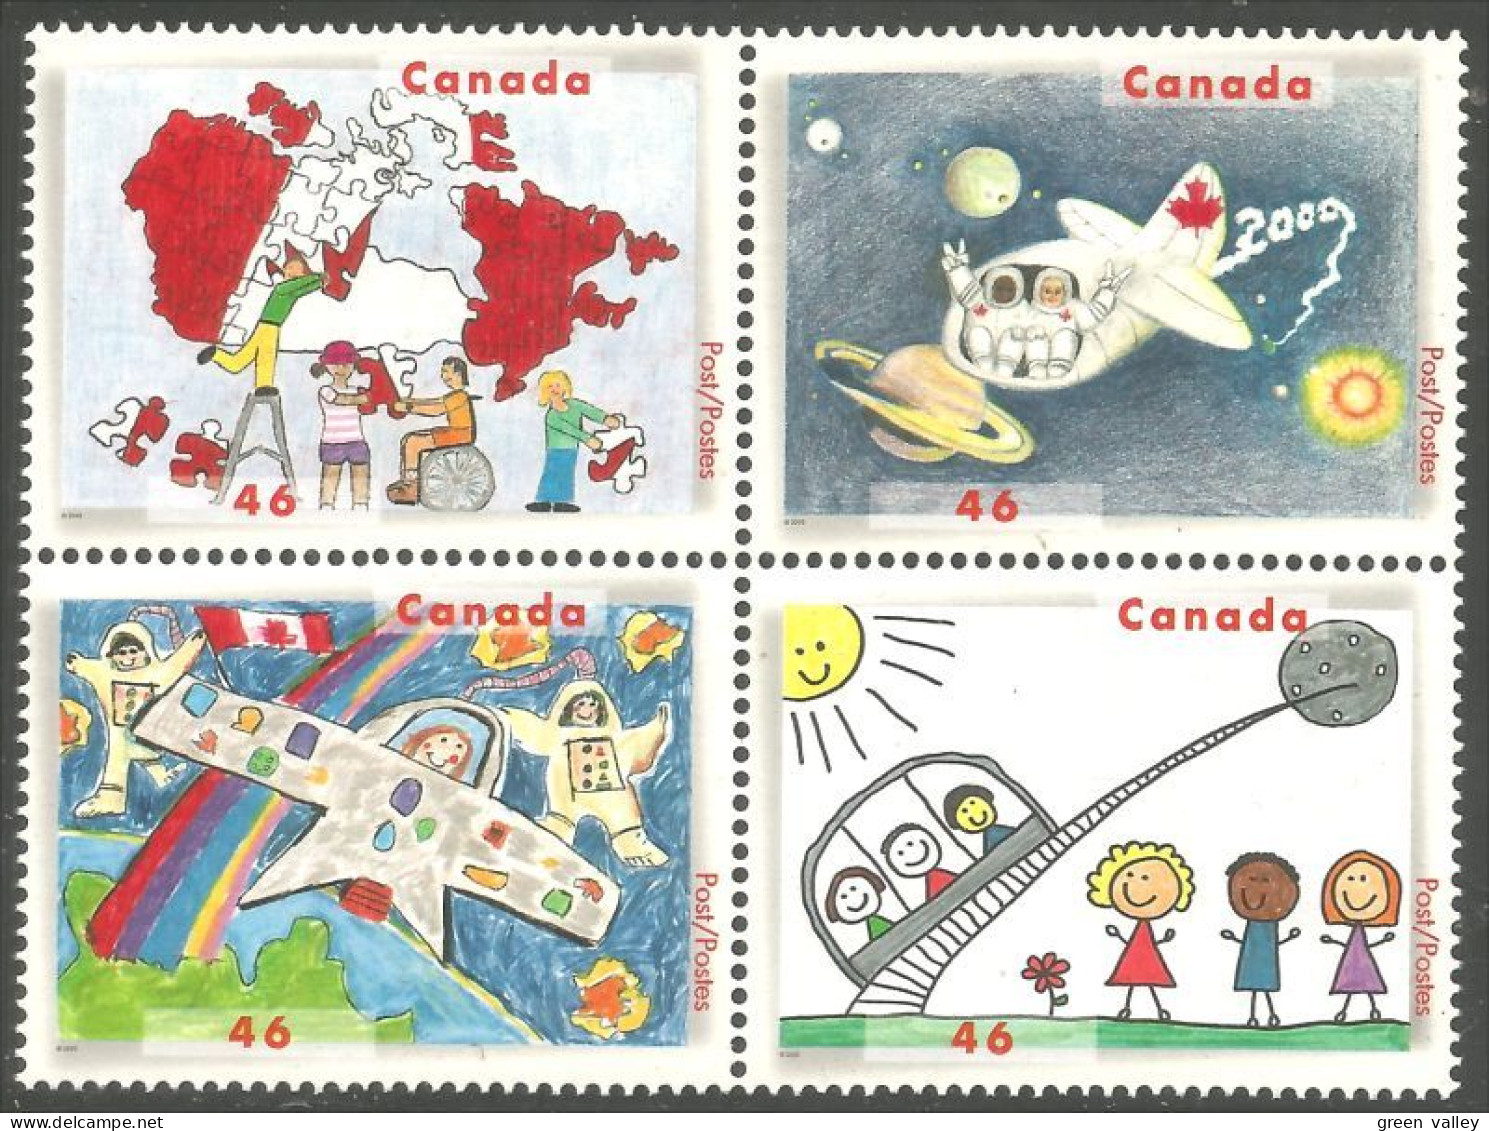 Canada Avion Airplane Dessin Enfants Children Drawings MNH ** Neuf SC (C18-62a) - Ungebraucht